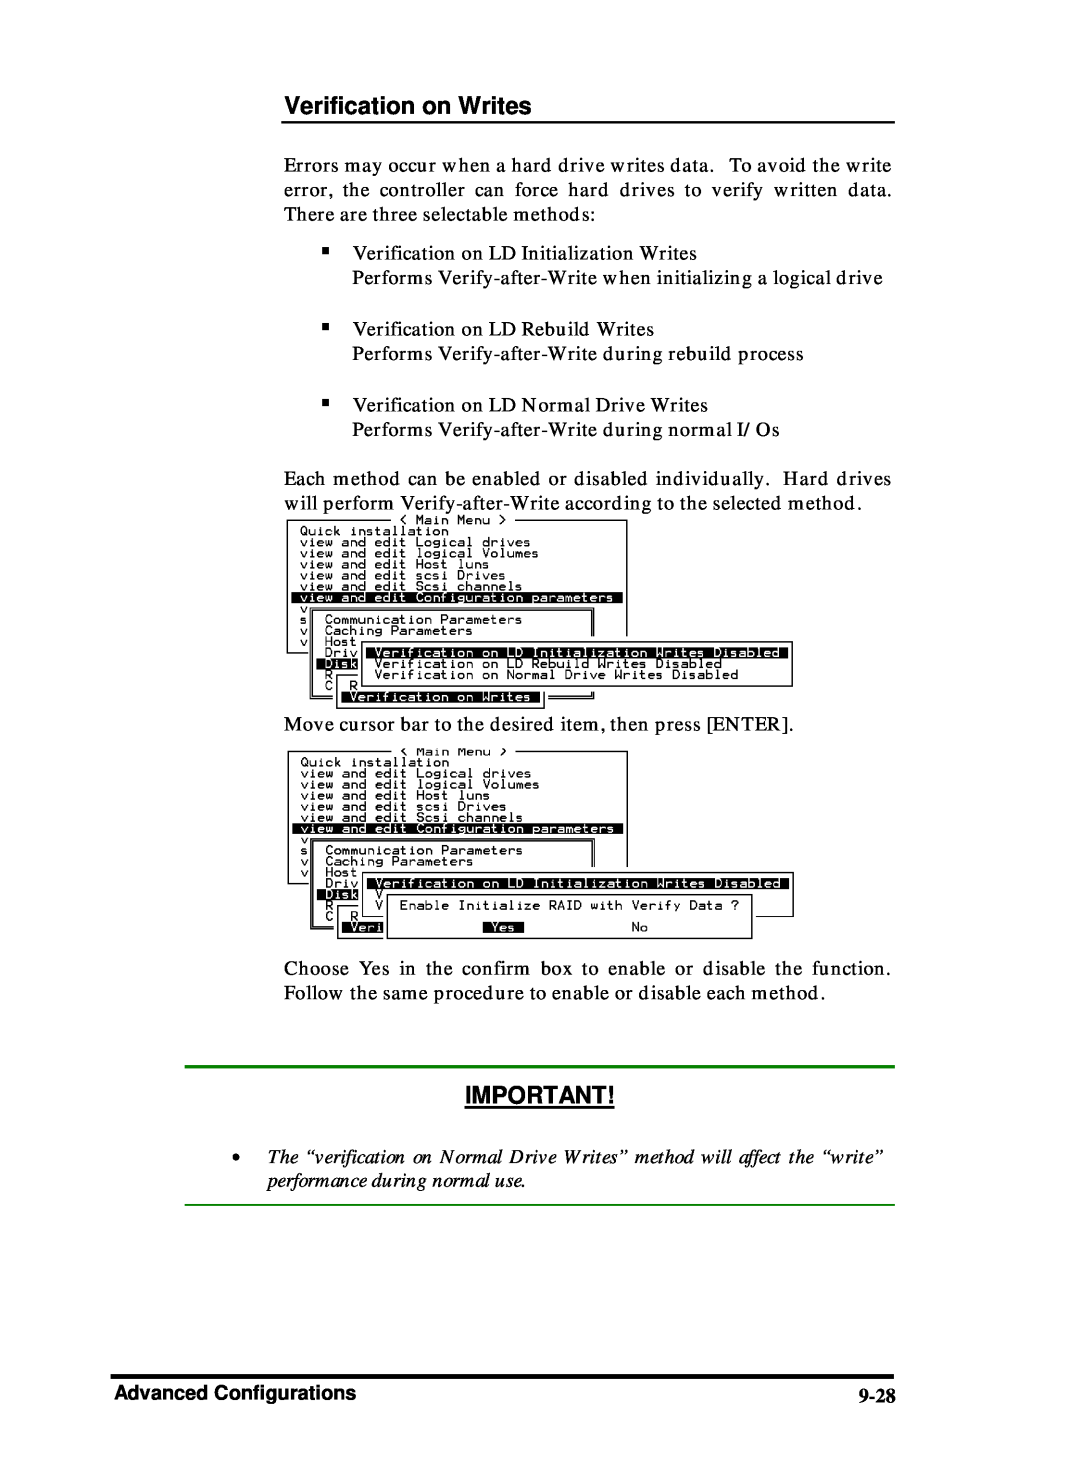 Compaq Infortrend manual Verification on Writes, 9-28 